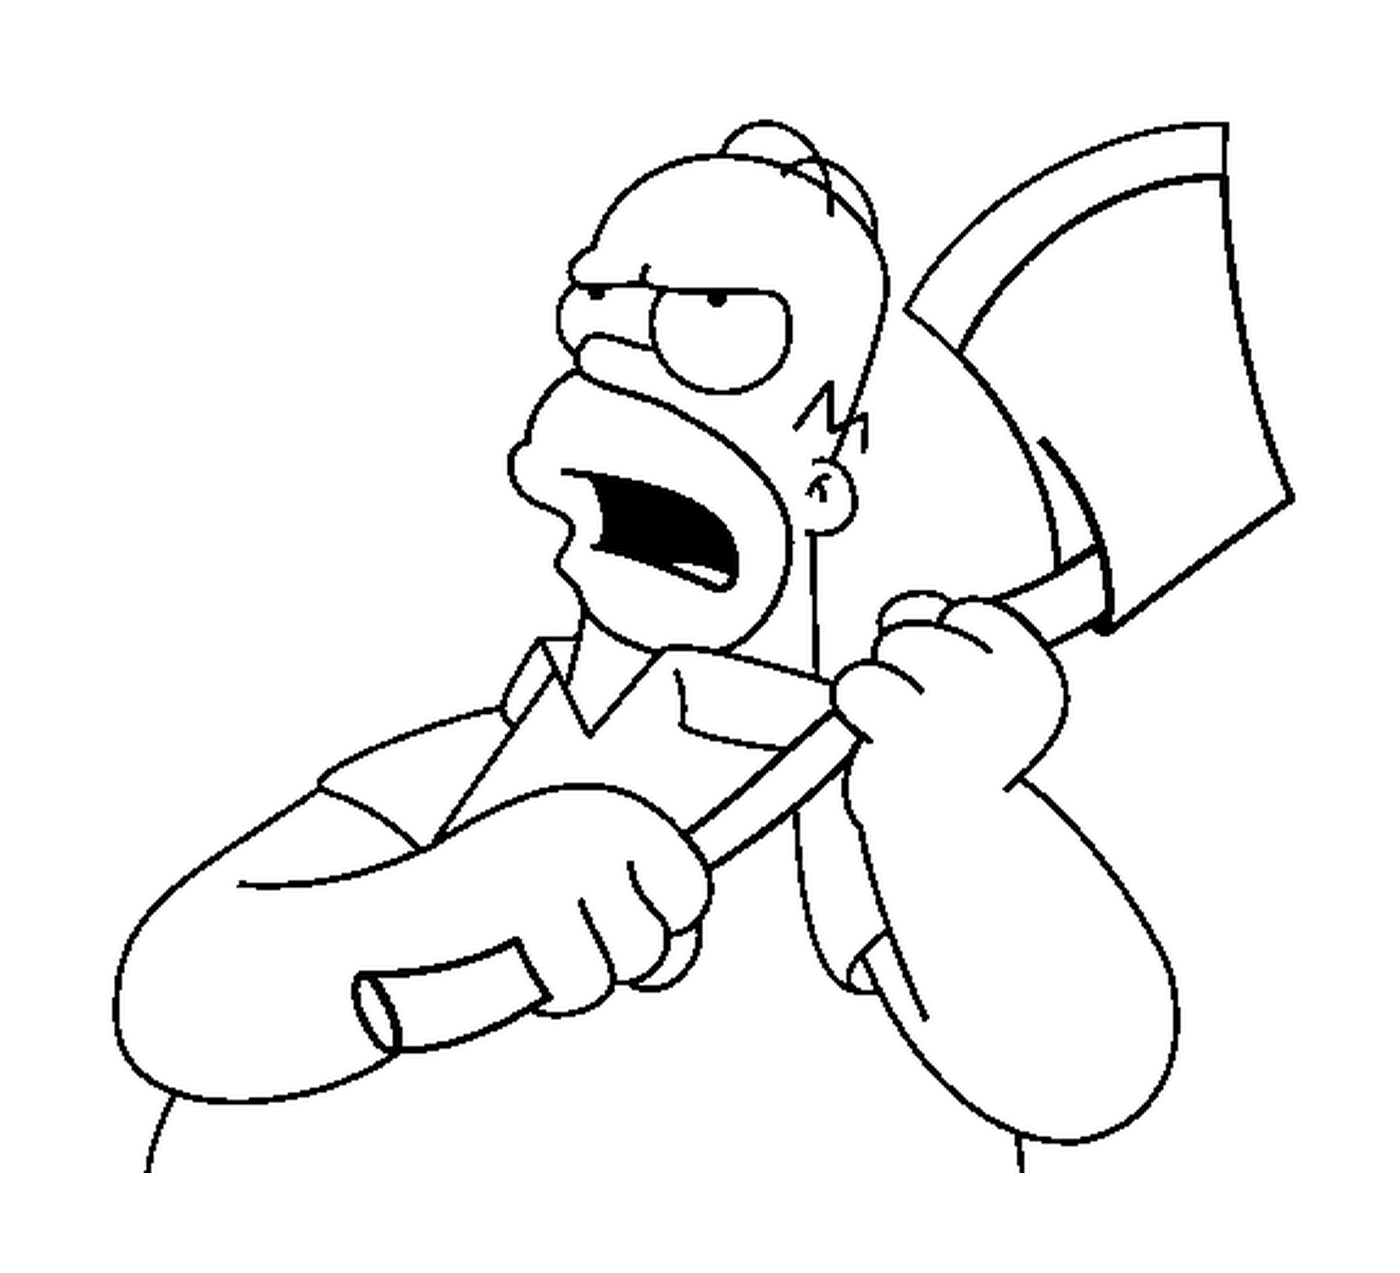   Homer avec une hache en main 